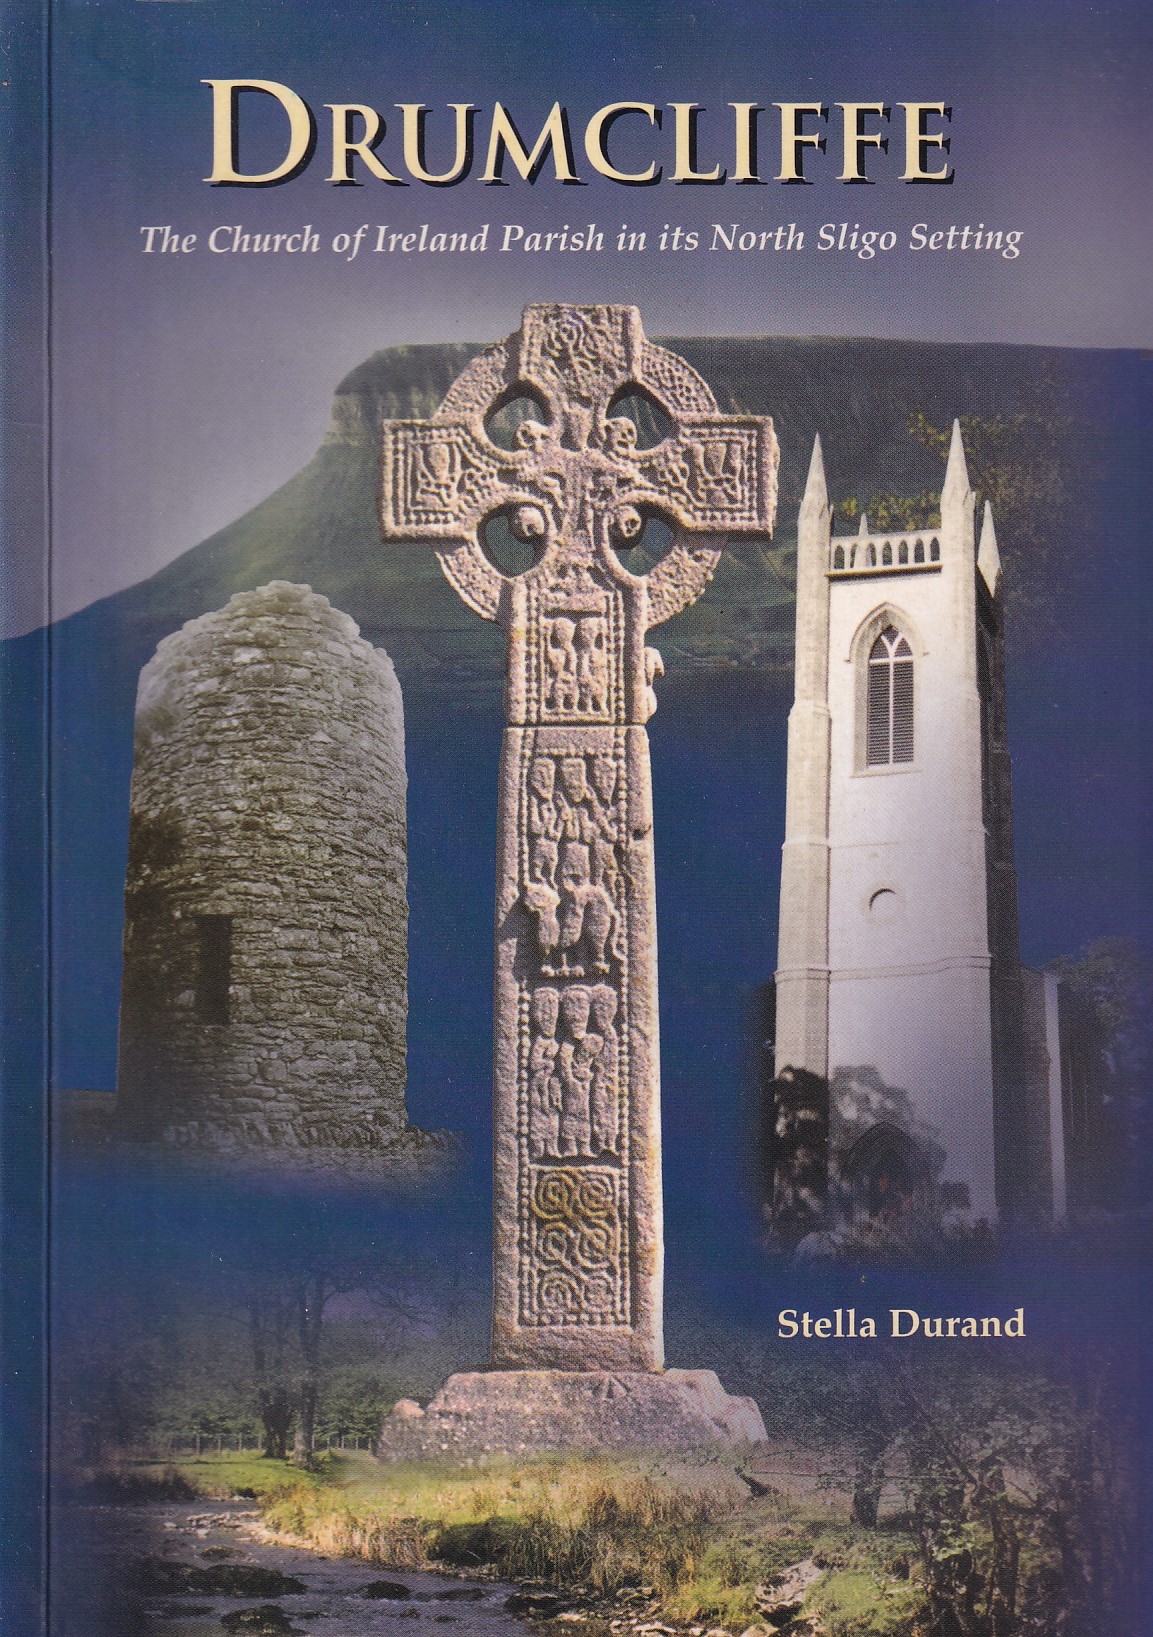 Drumcliffe: The Church of Ireland Parish in Its North Sligo Setting by Stella Durand